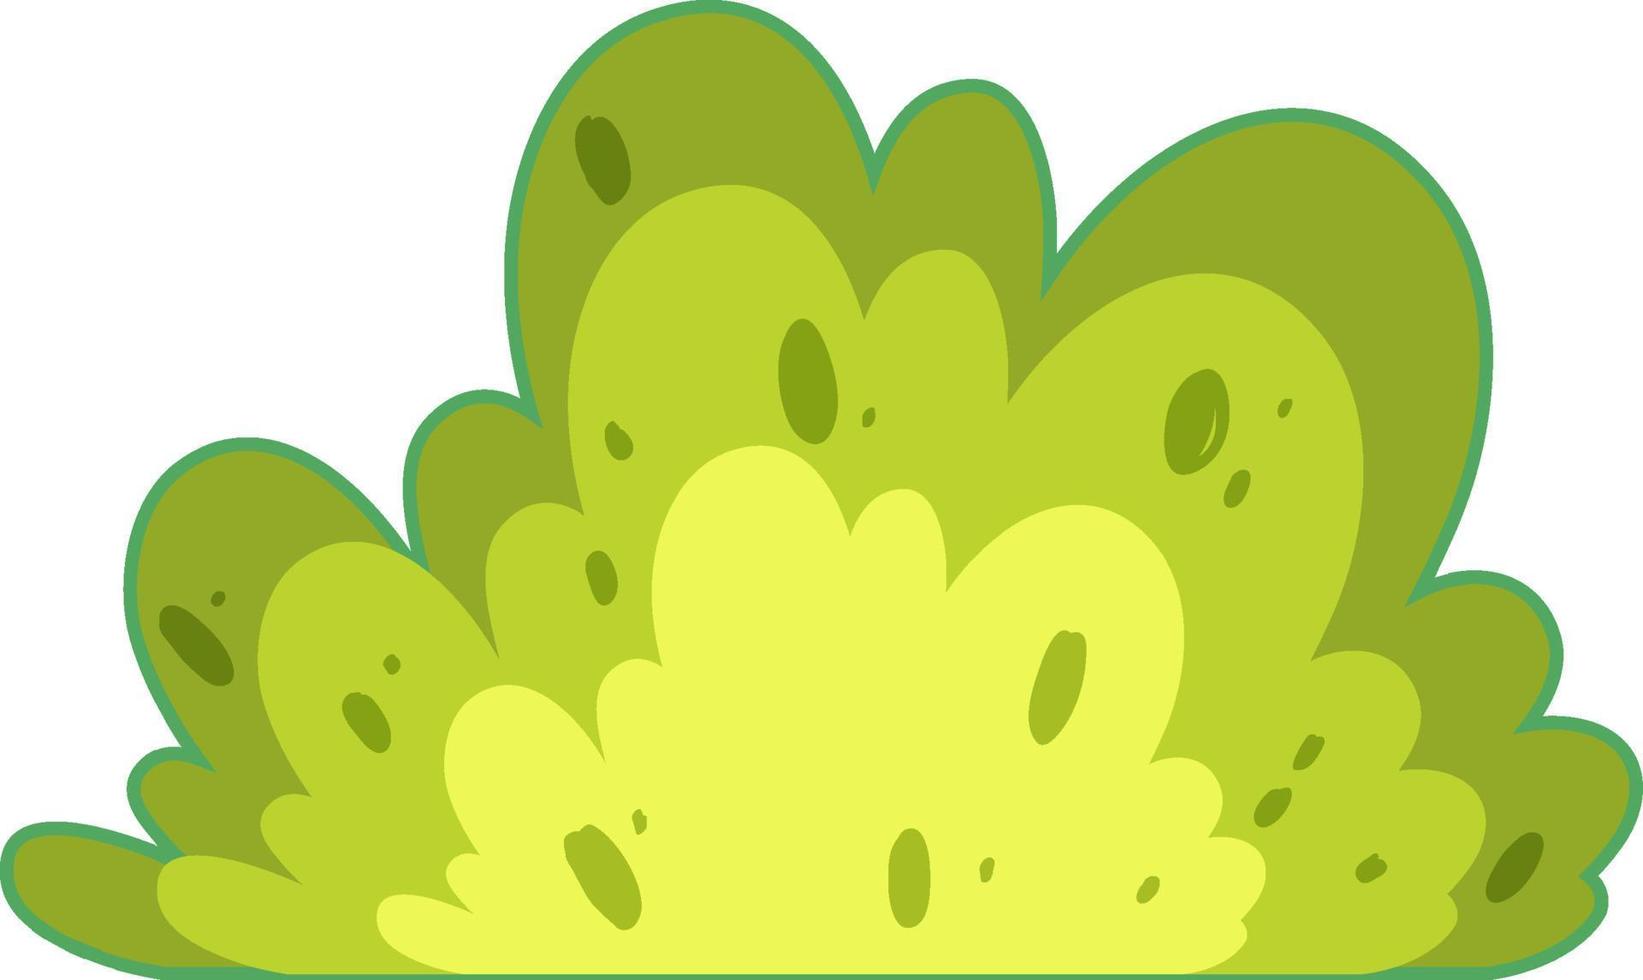 grön buske i tecknad stil vektor